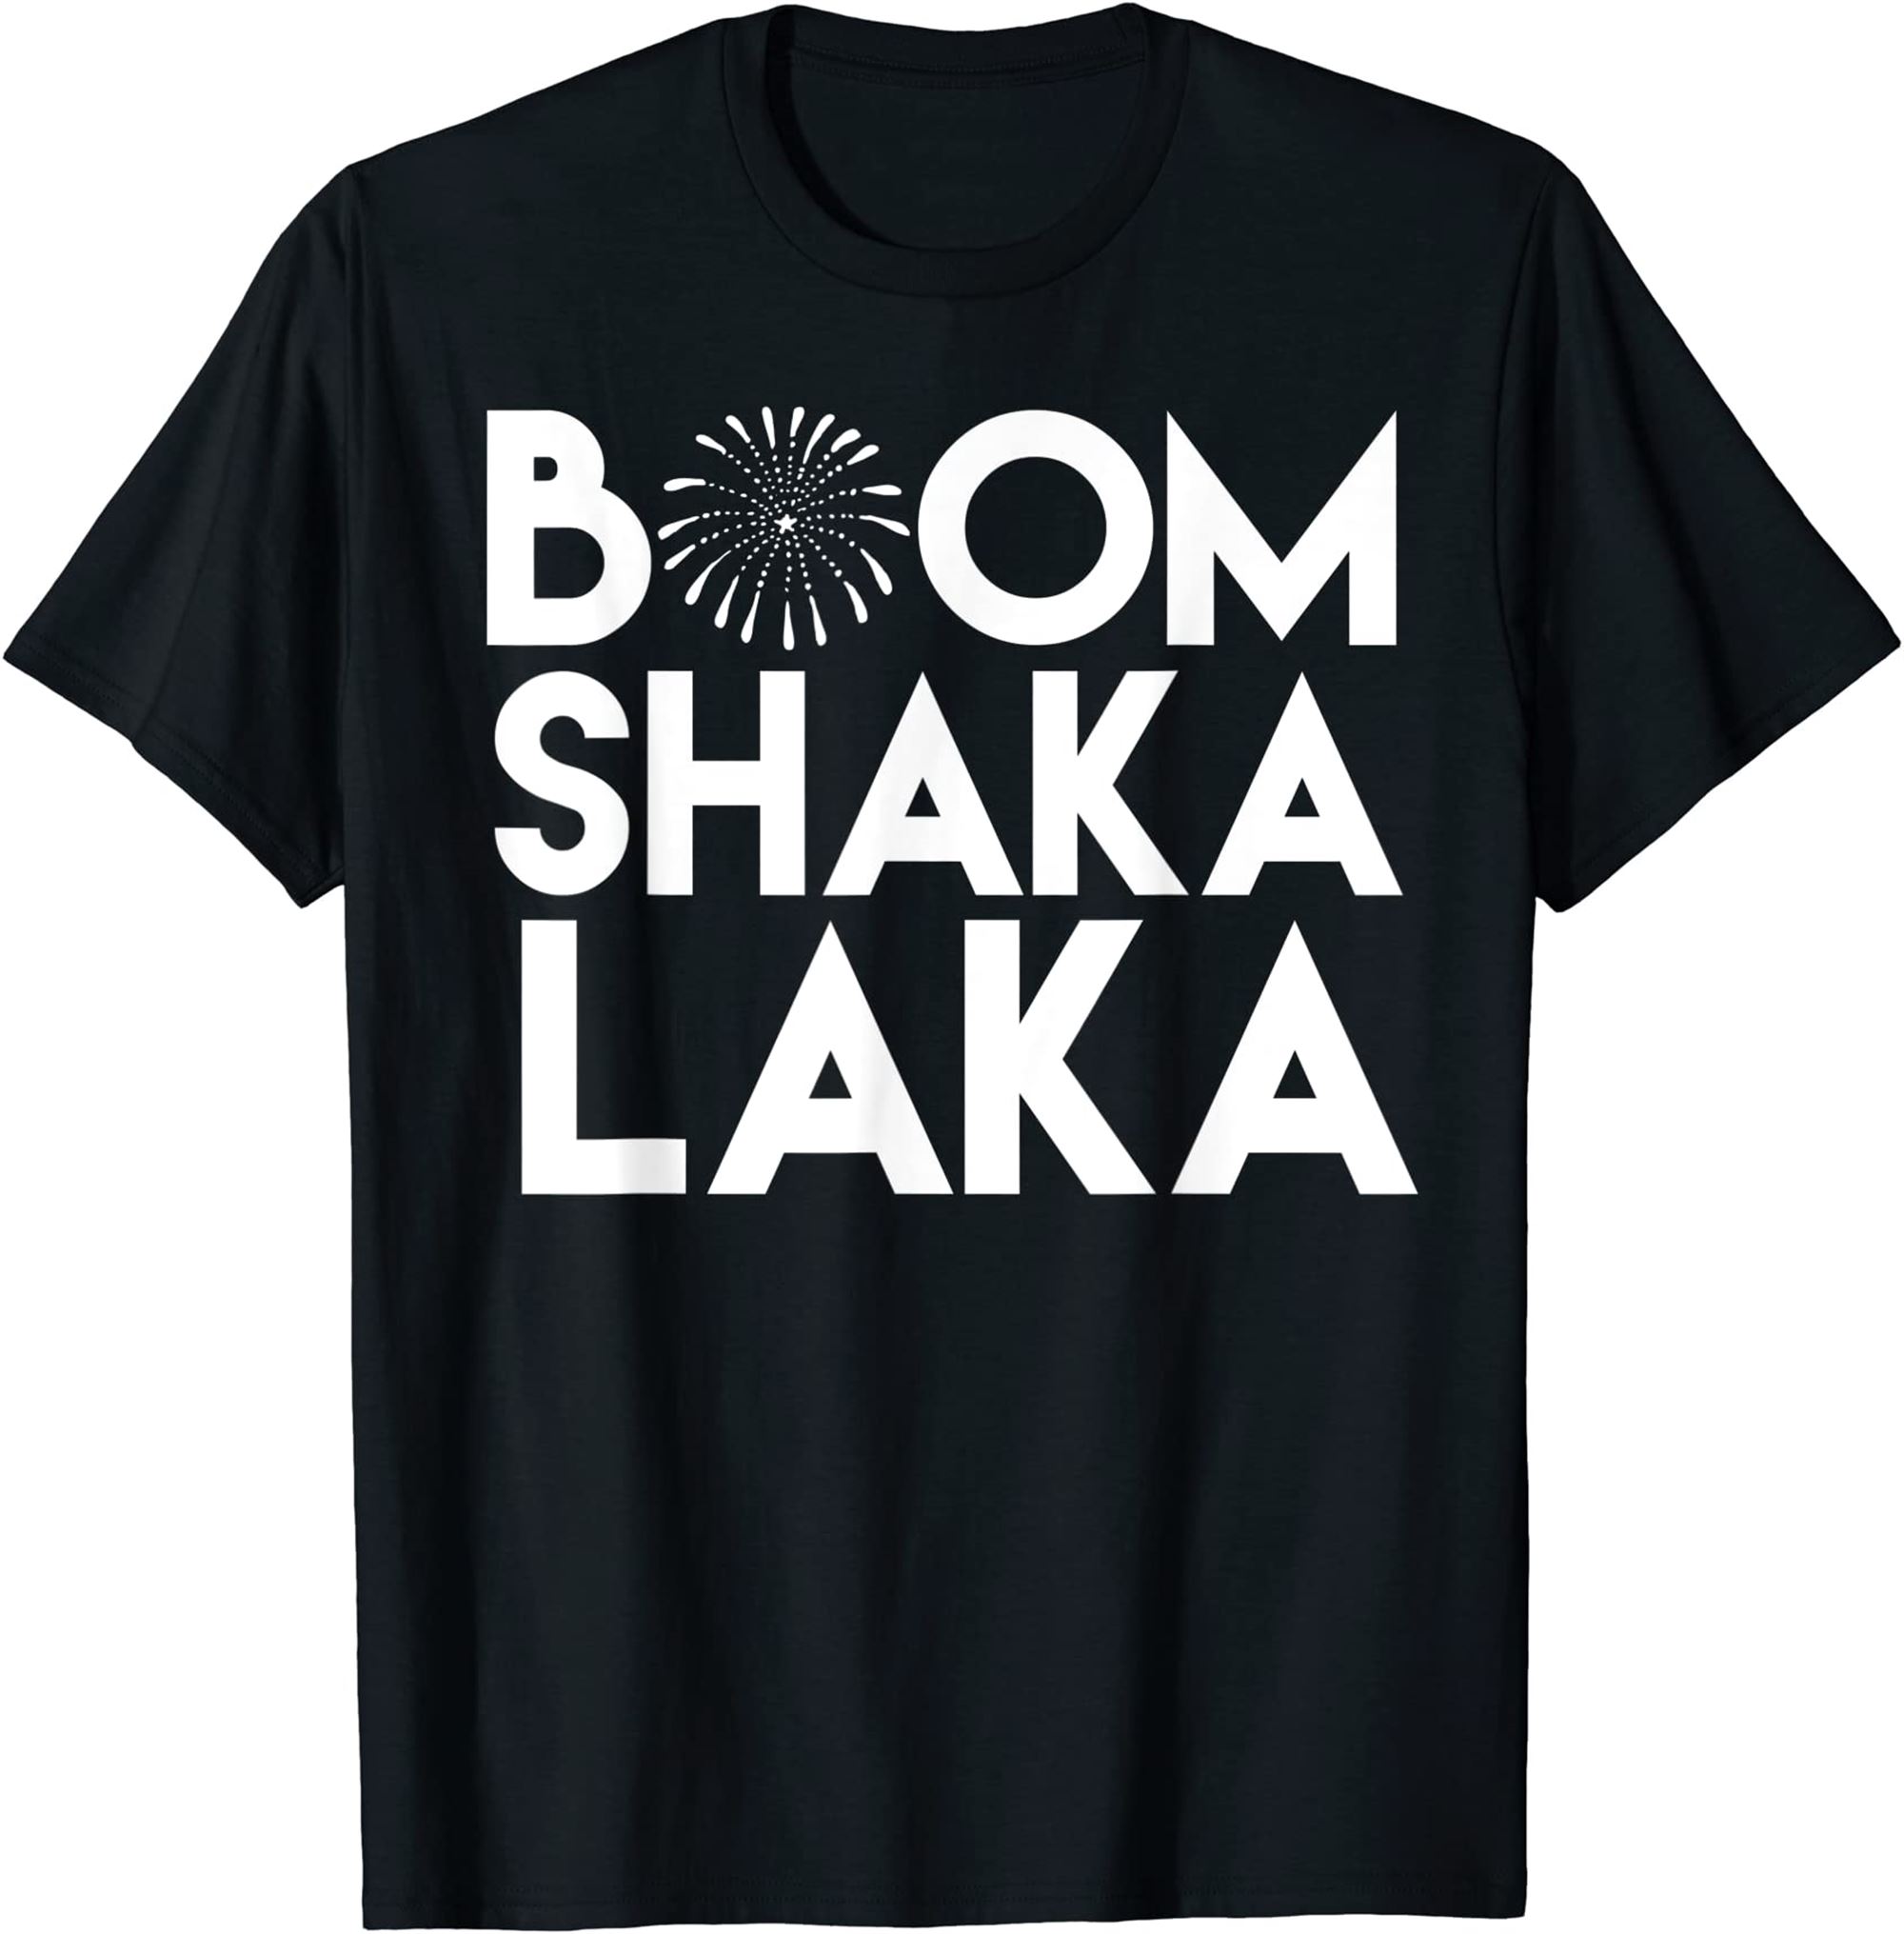 Boom Shaka Laka July 4th With Fireworks T-shirt Plus Size Up To 5xl